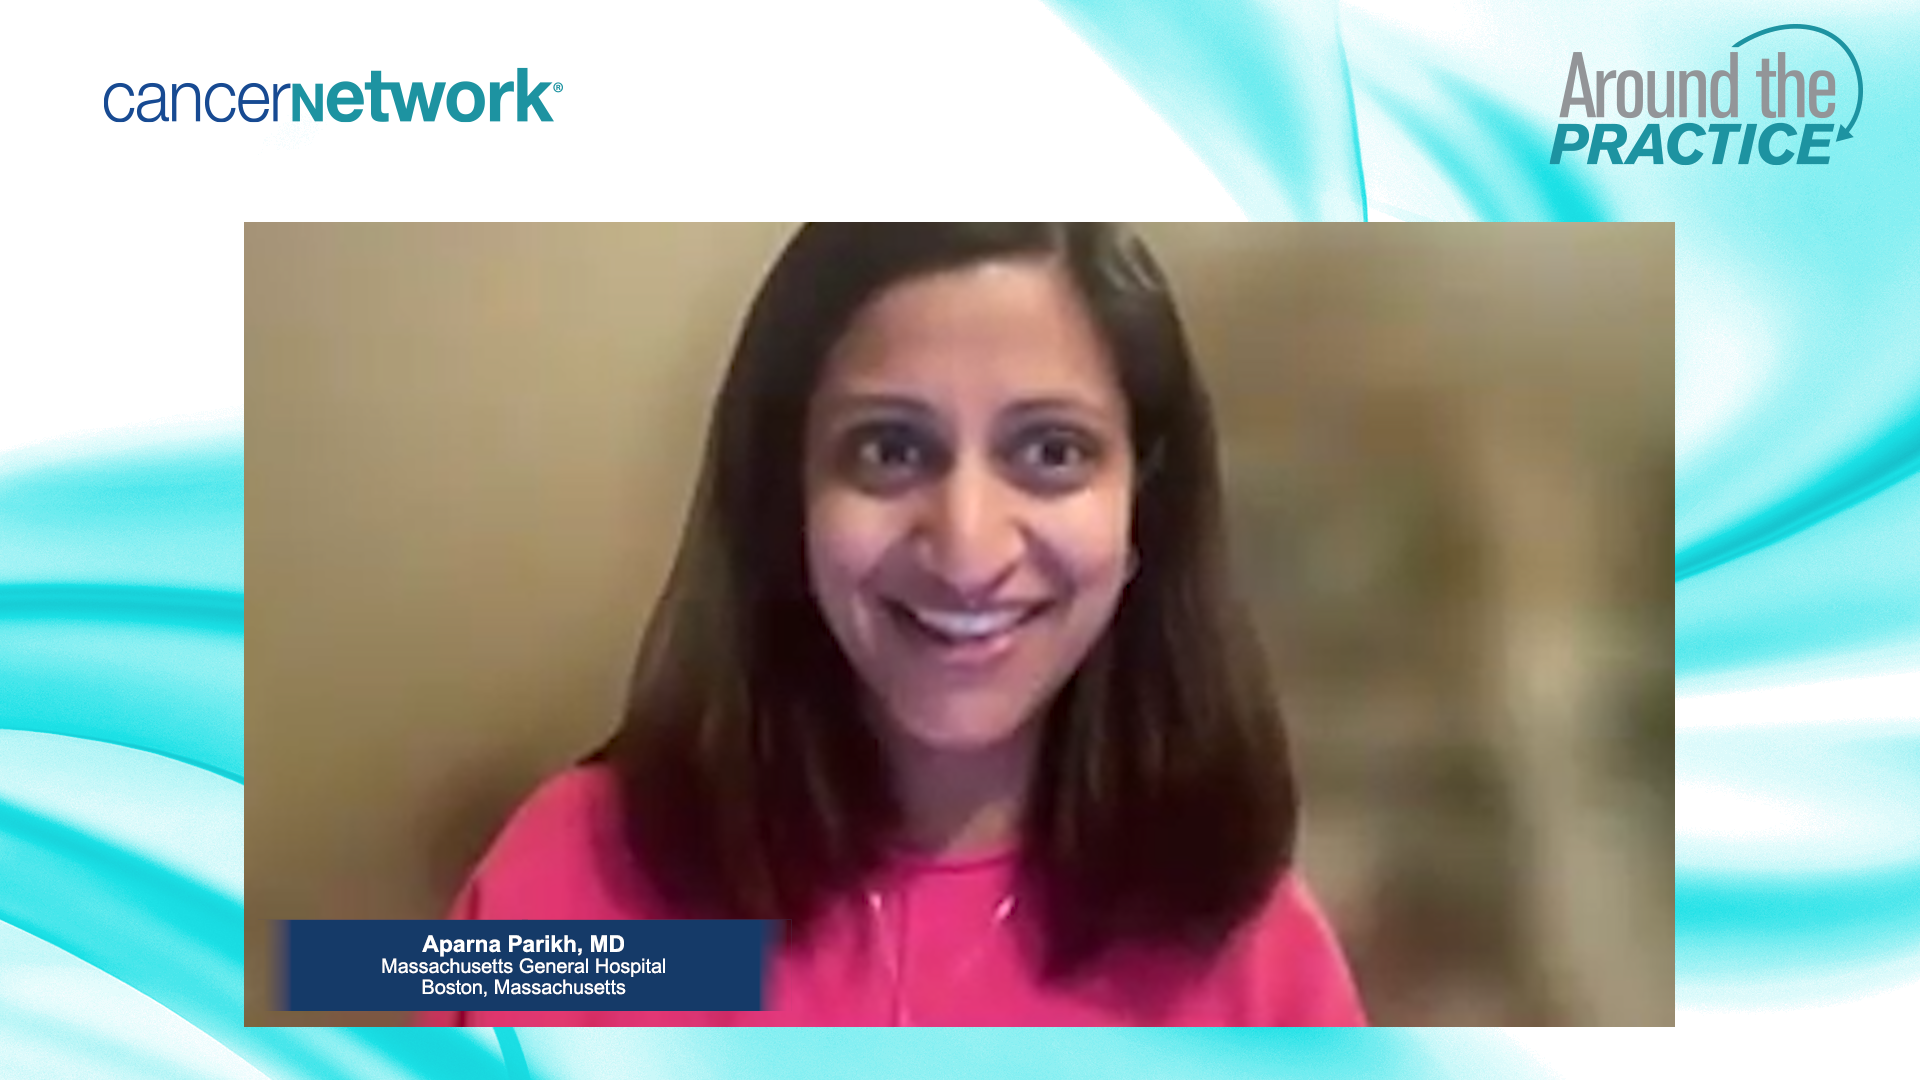 Aparna Parikh, MD, an expert on colorectal cancer